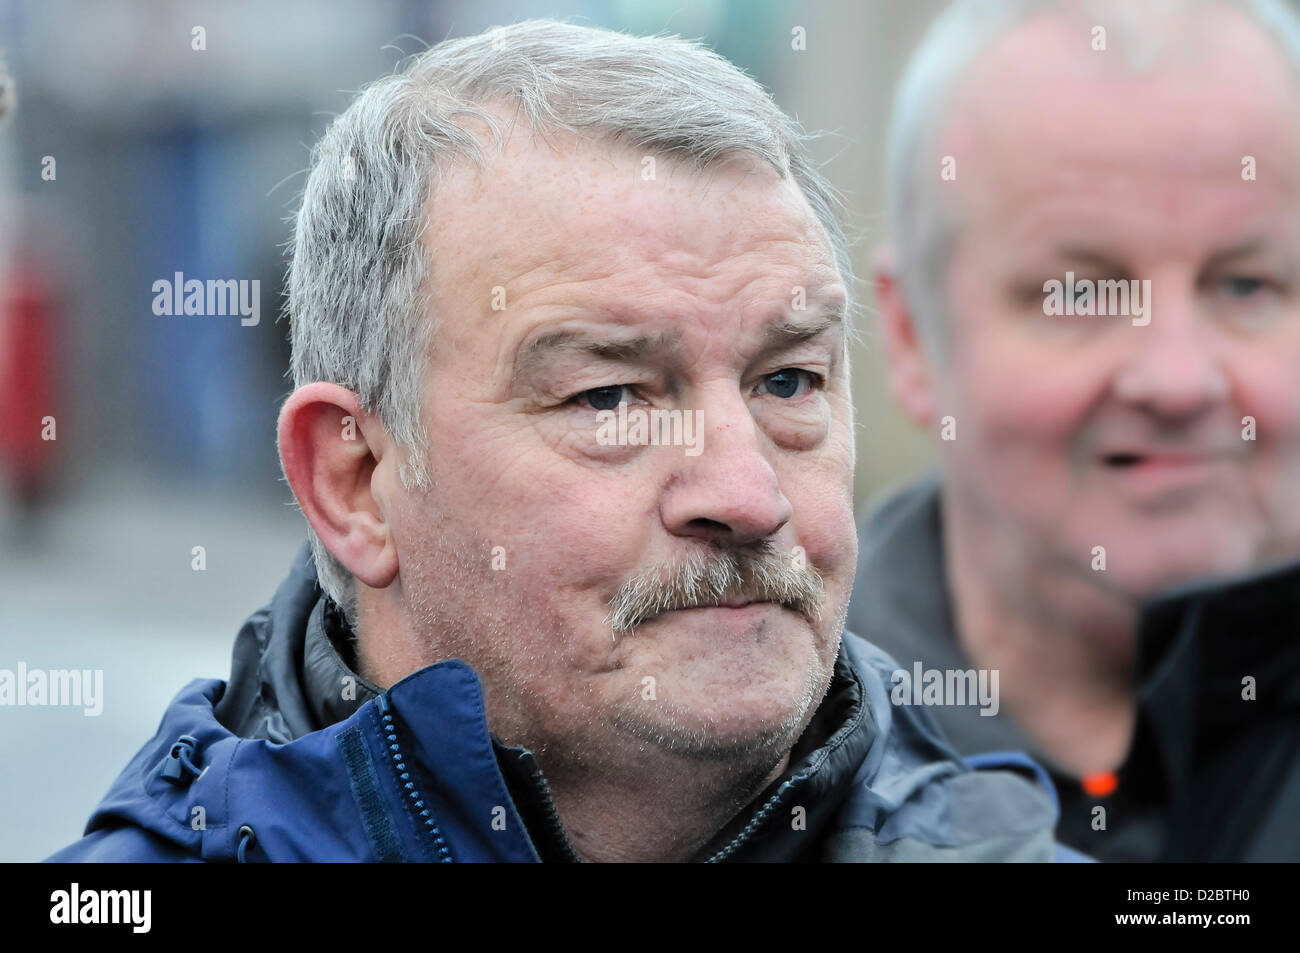 19th January 2013. Belfast, Northern Ireland - Community worker Jim Wilson, former PUP member. Stock Photo